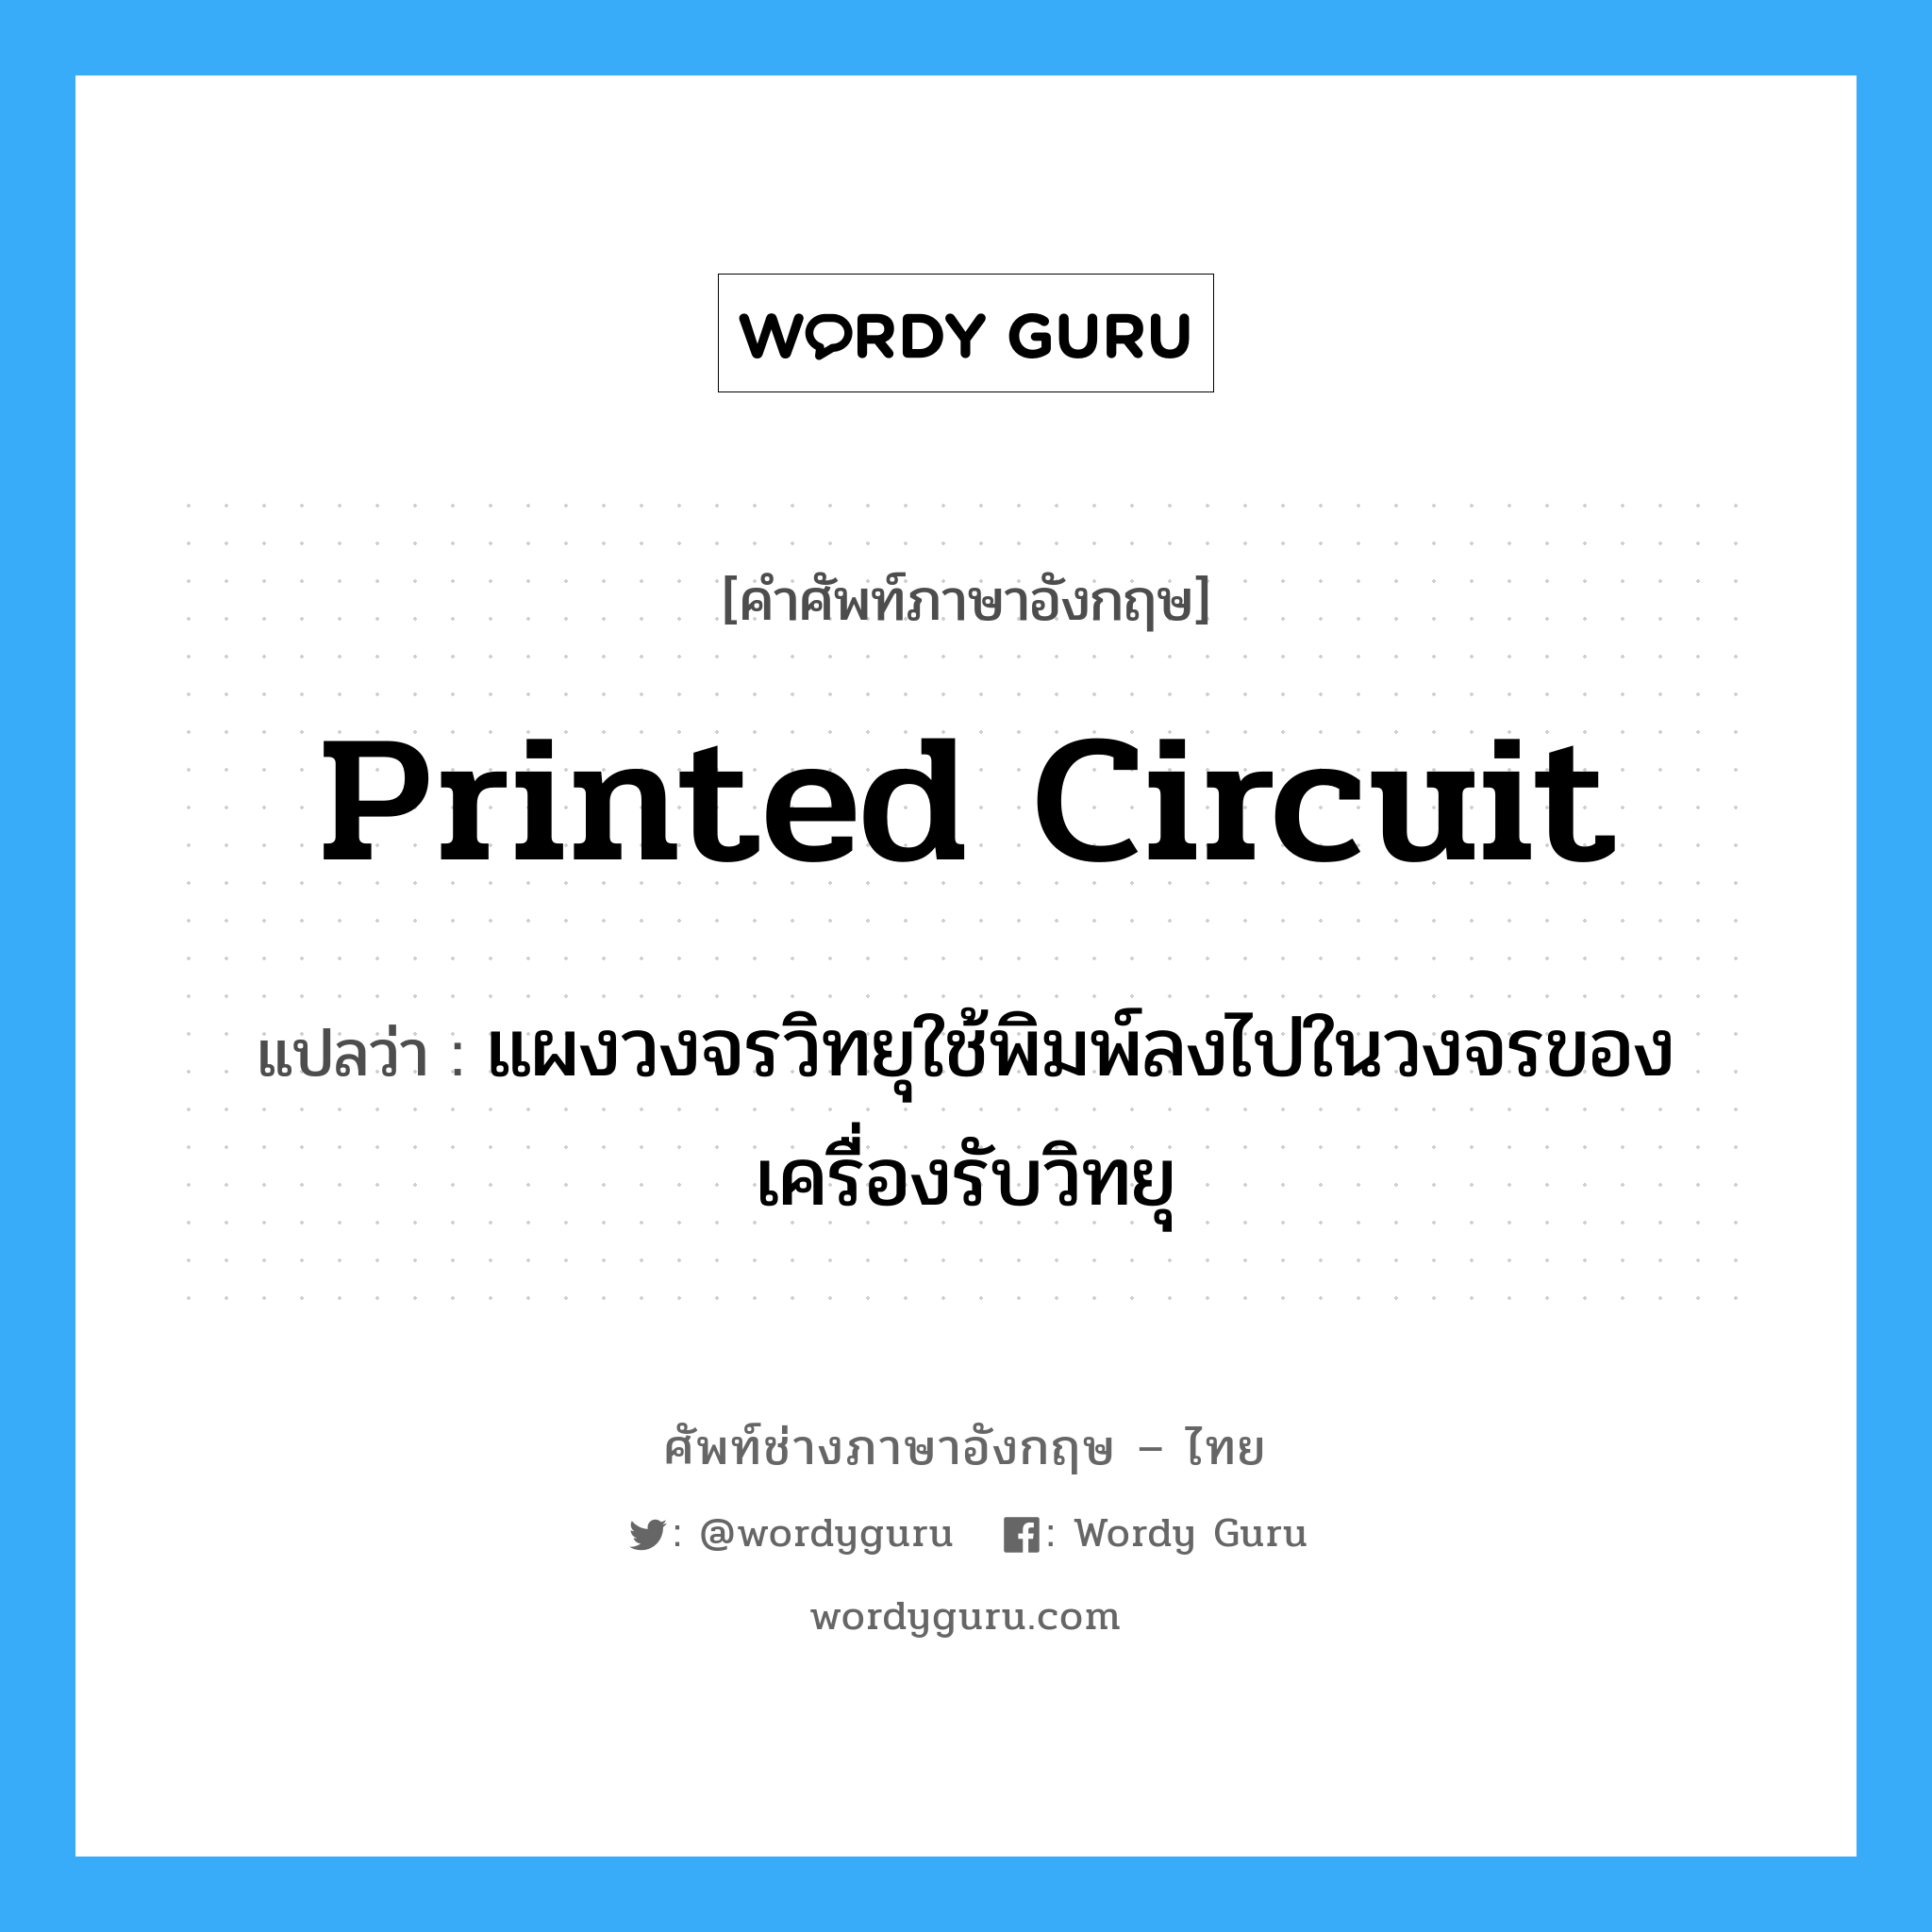 printed circuit แปลว่า?, คำศัพท์ช่างภาษาอังกฤษ - ไทย printed circuit คำศัพท์ภาษาอังกฤษ printed circuit แปลว่า แผงวงจรวิทยุใช้พิมพ์ลงไปในวงจรของเครื่องรับวิทยุ